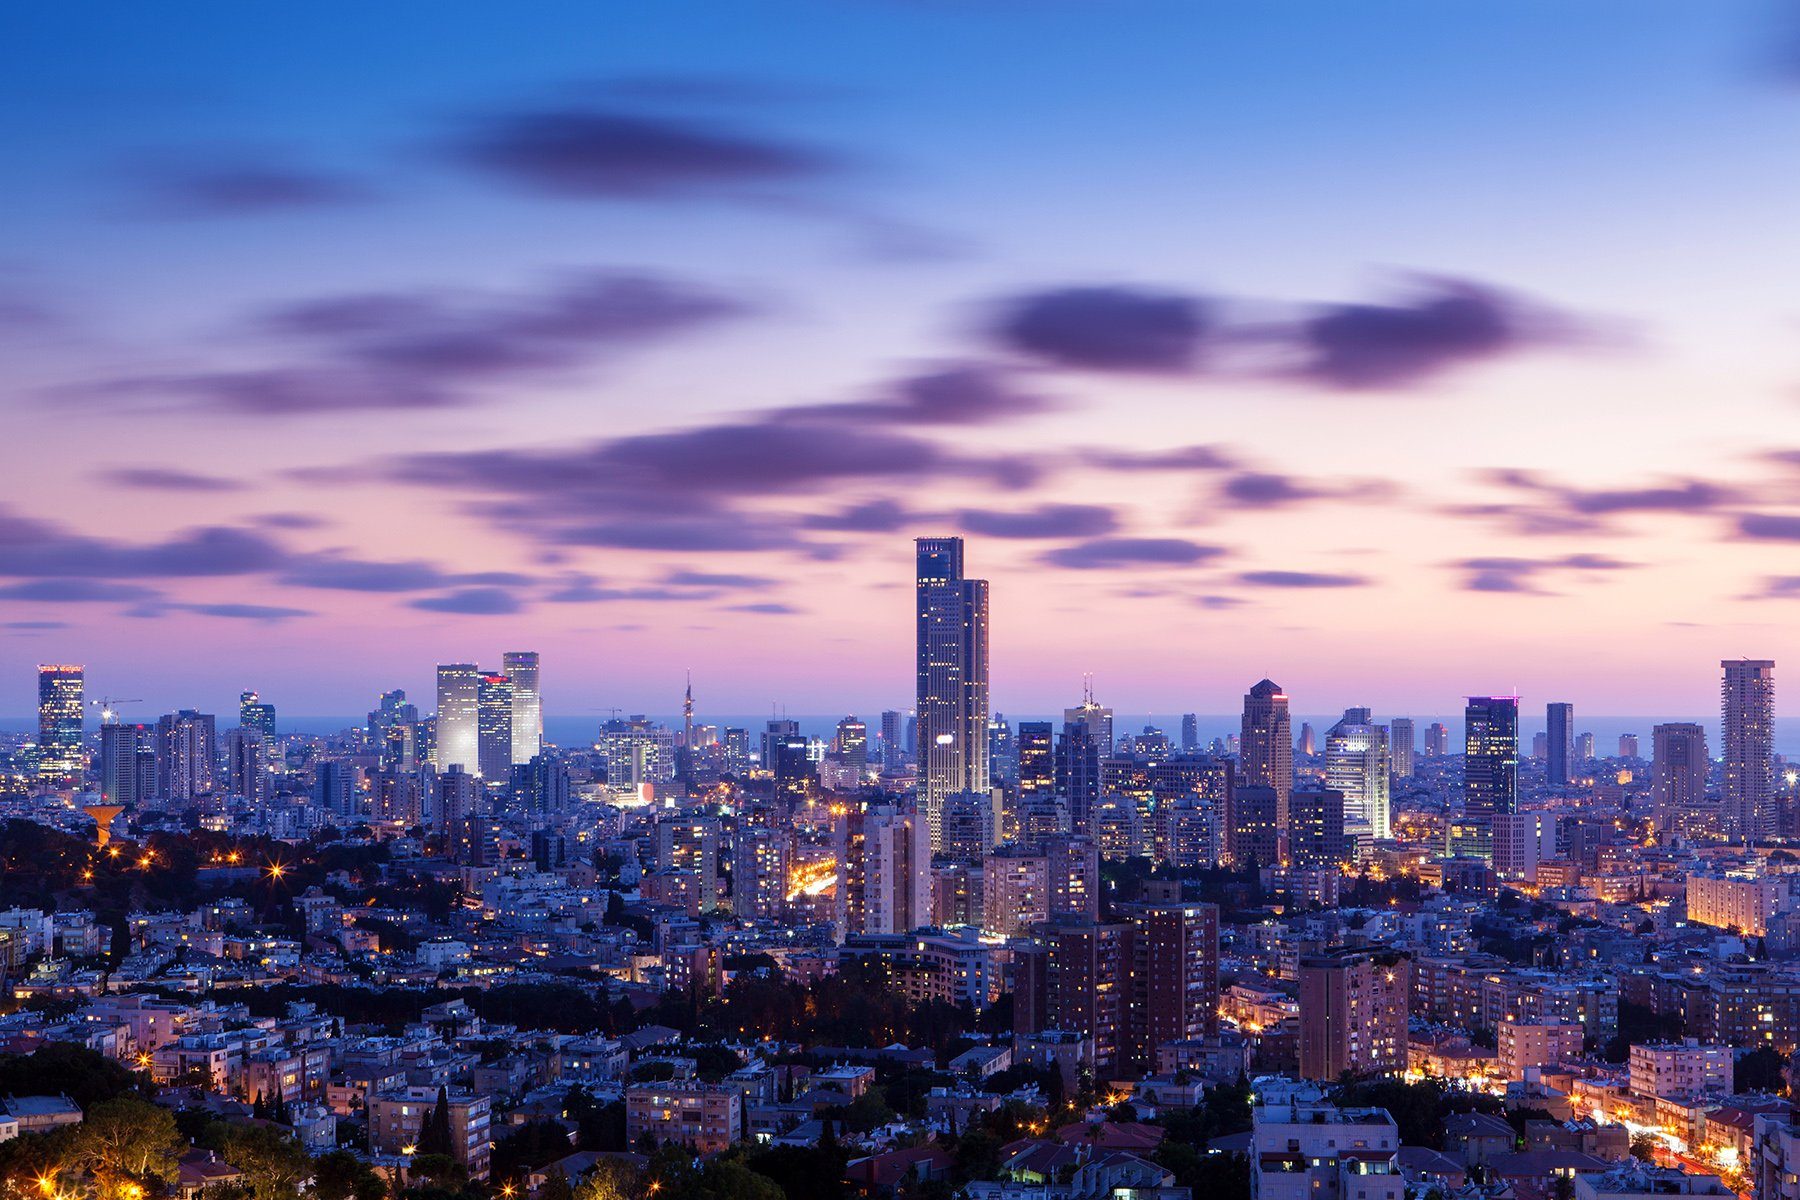 Purple Tel-Aviv - Israel Fine Art Photography AHAVART 